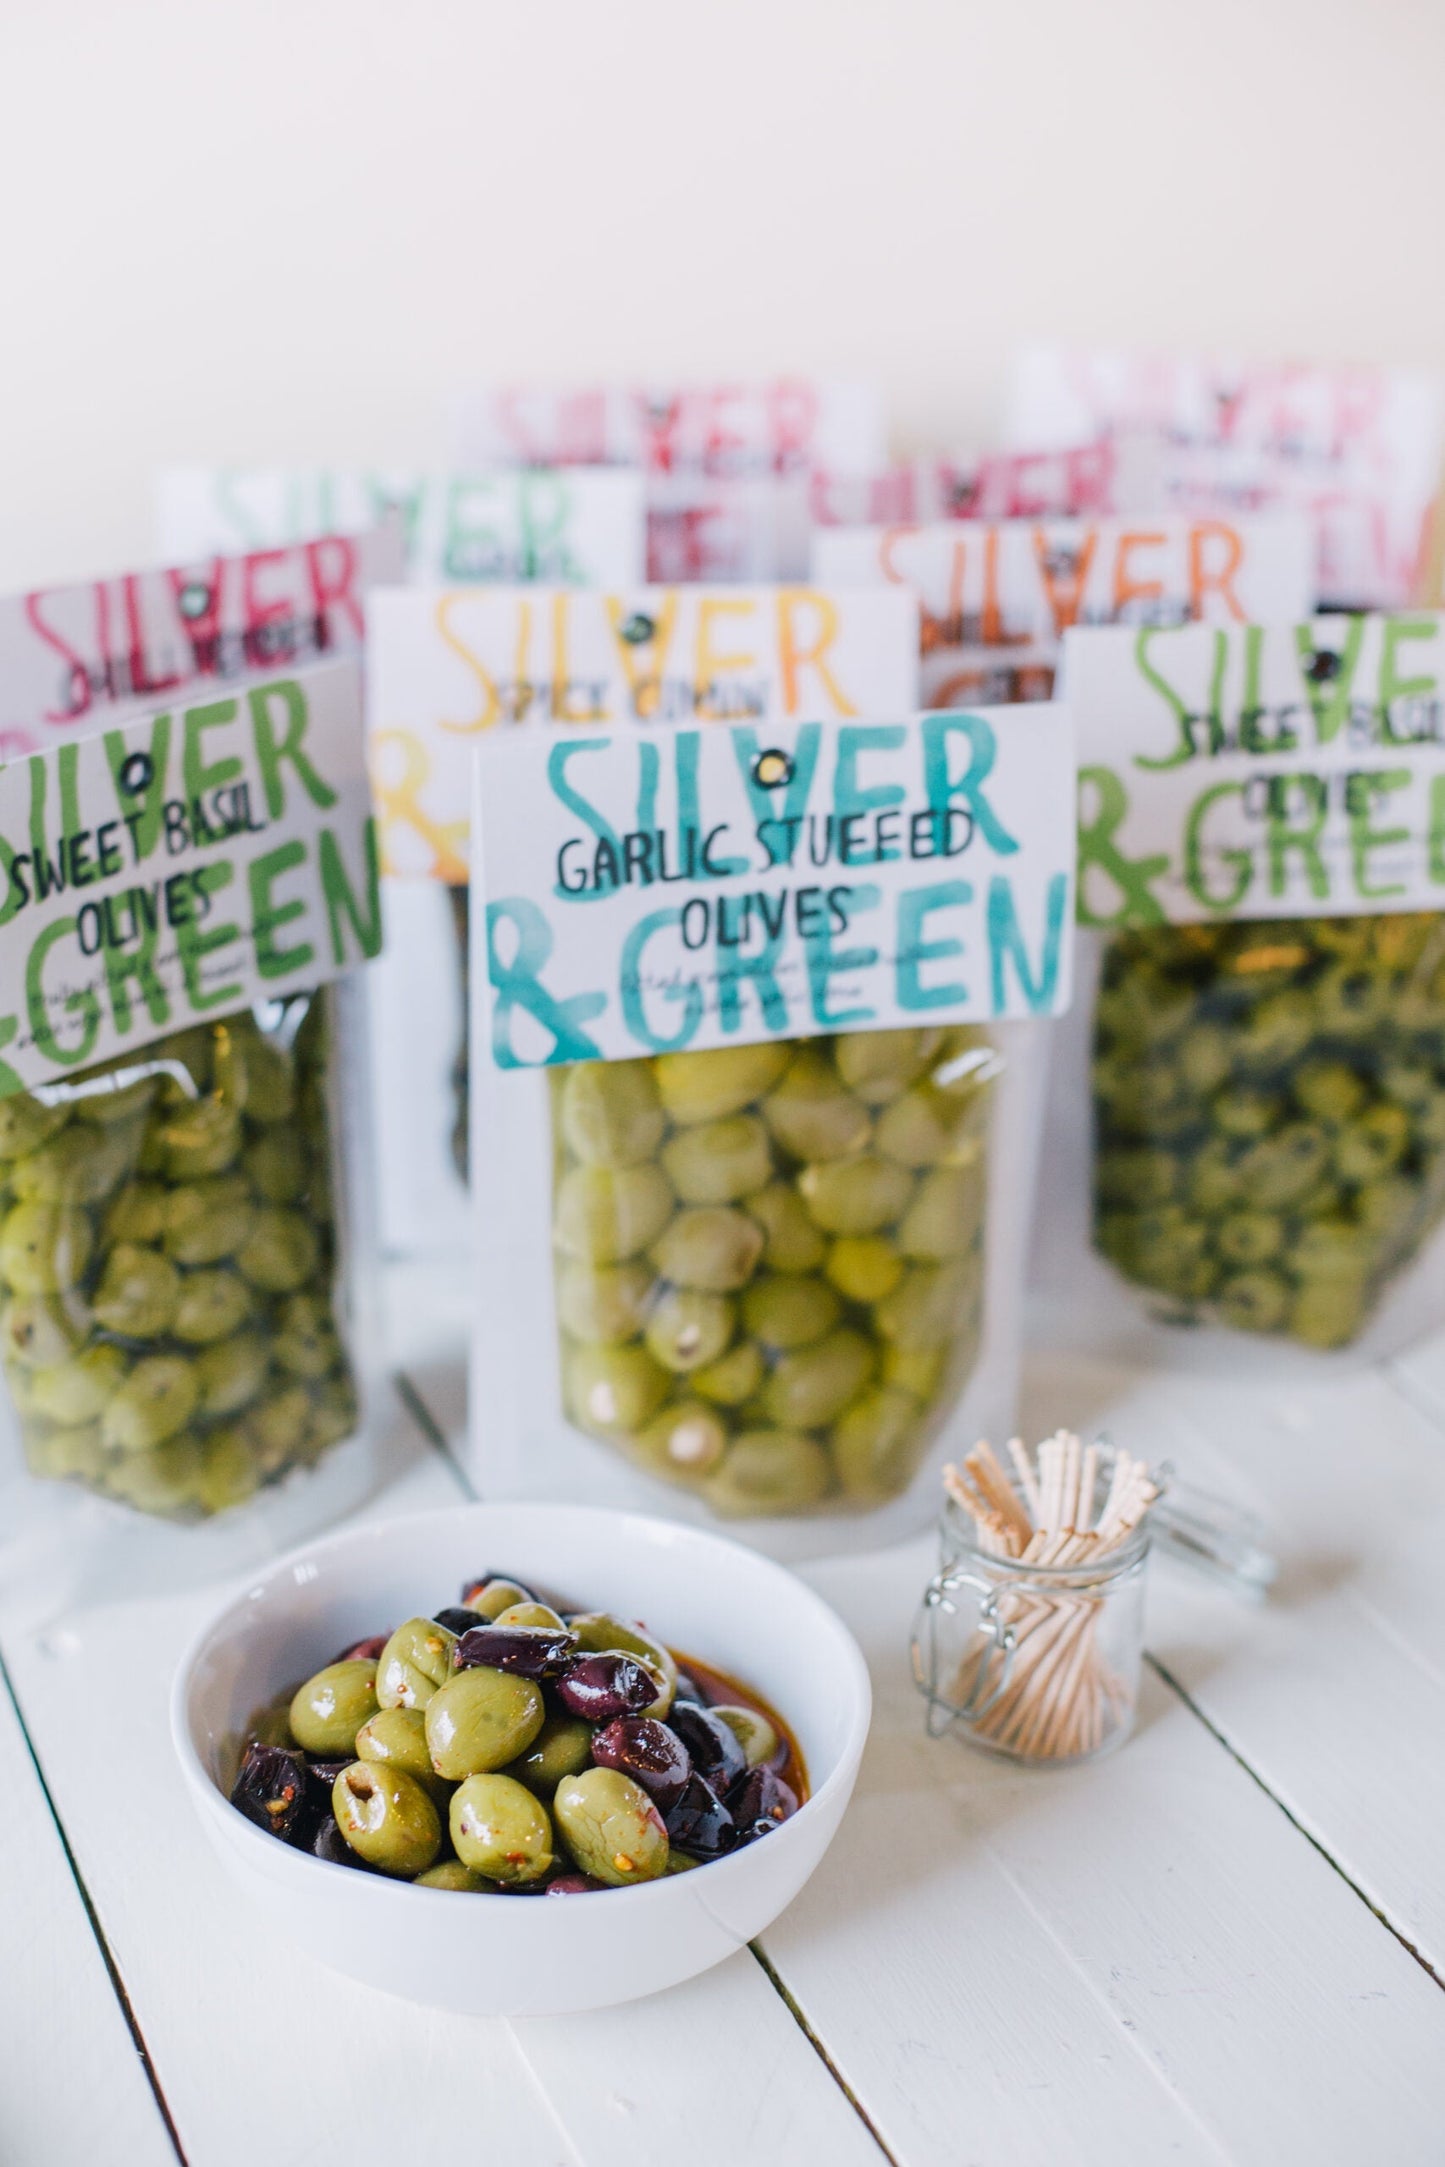 Silver & Green | Garlic Stuffed Olives (220g)